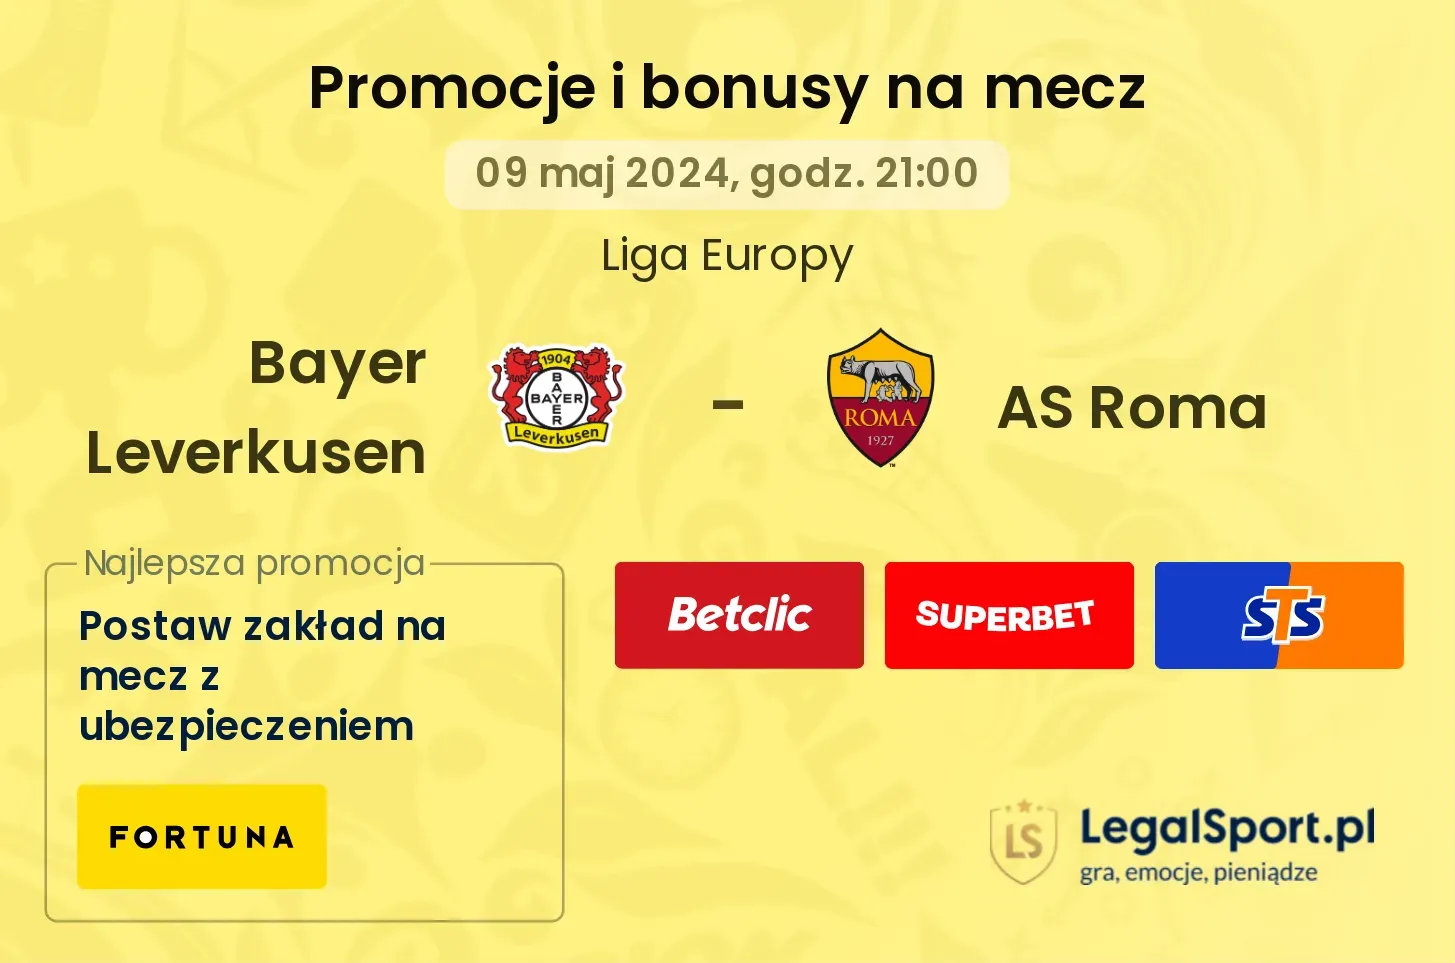 Bayer Leverkusen - AS Roma bonusy i promocje (09.05, 21:00)